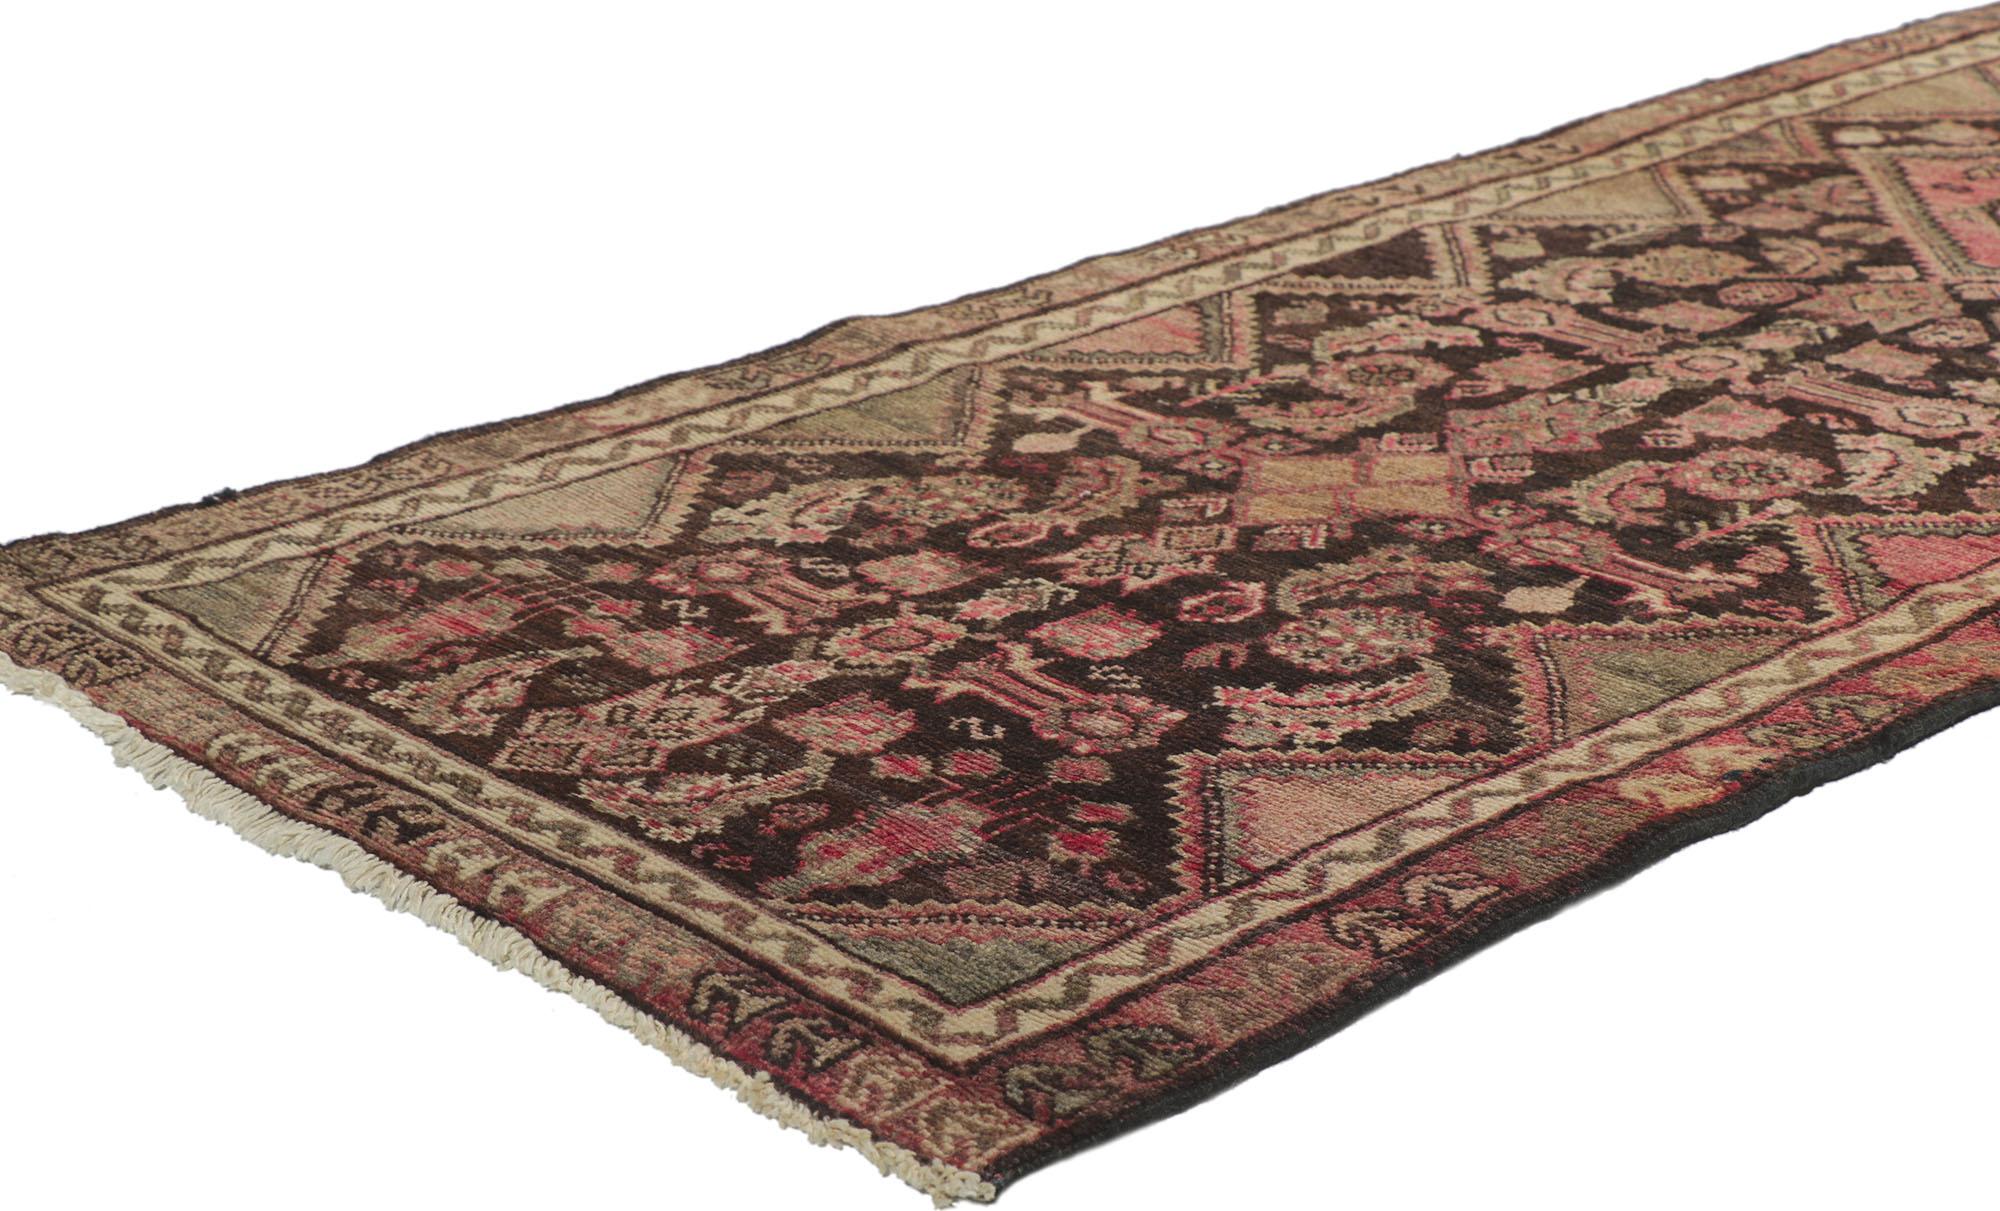 78176 Antique Persian Malayer rug, 02'06 x 08'06.